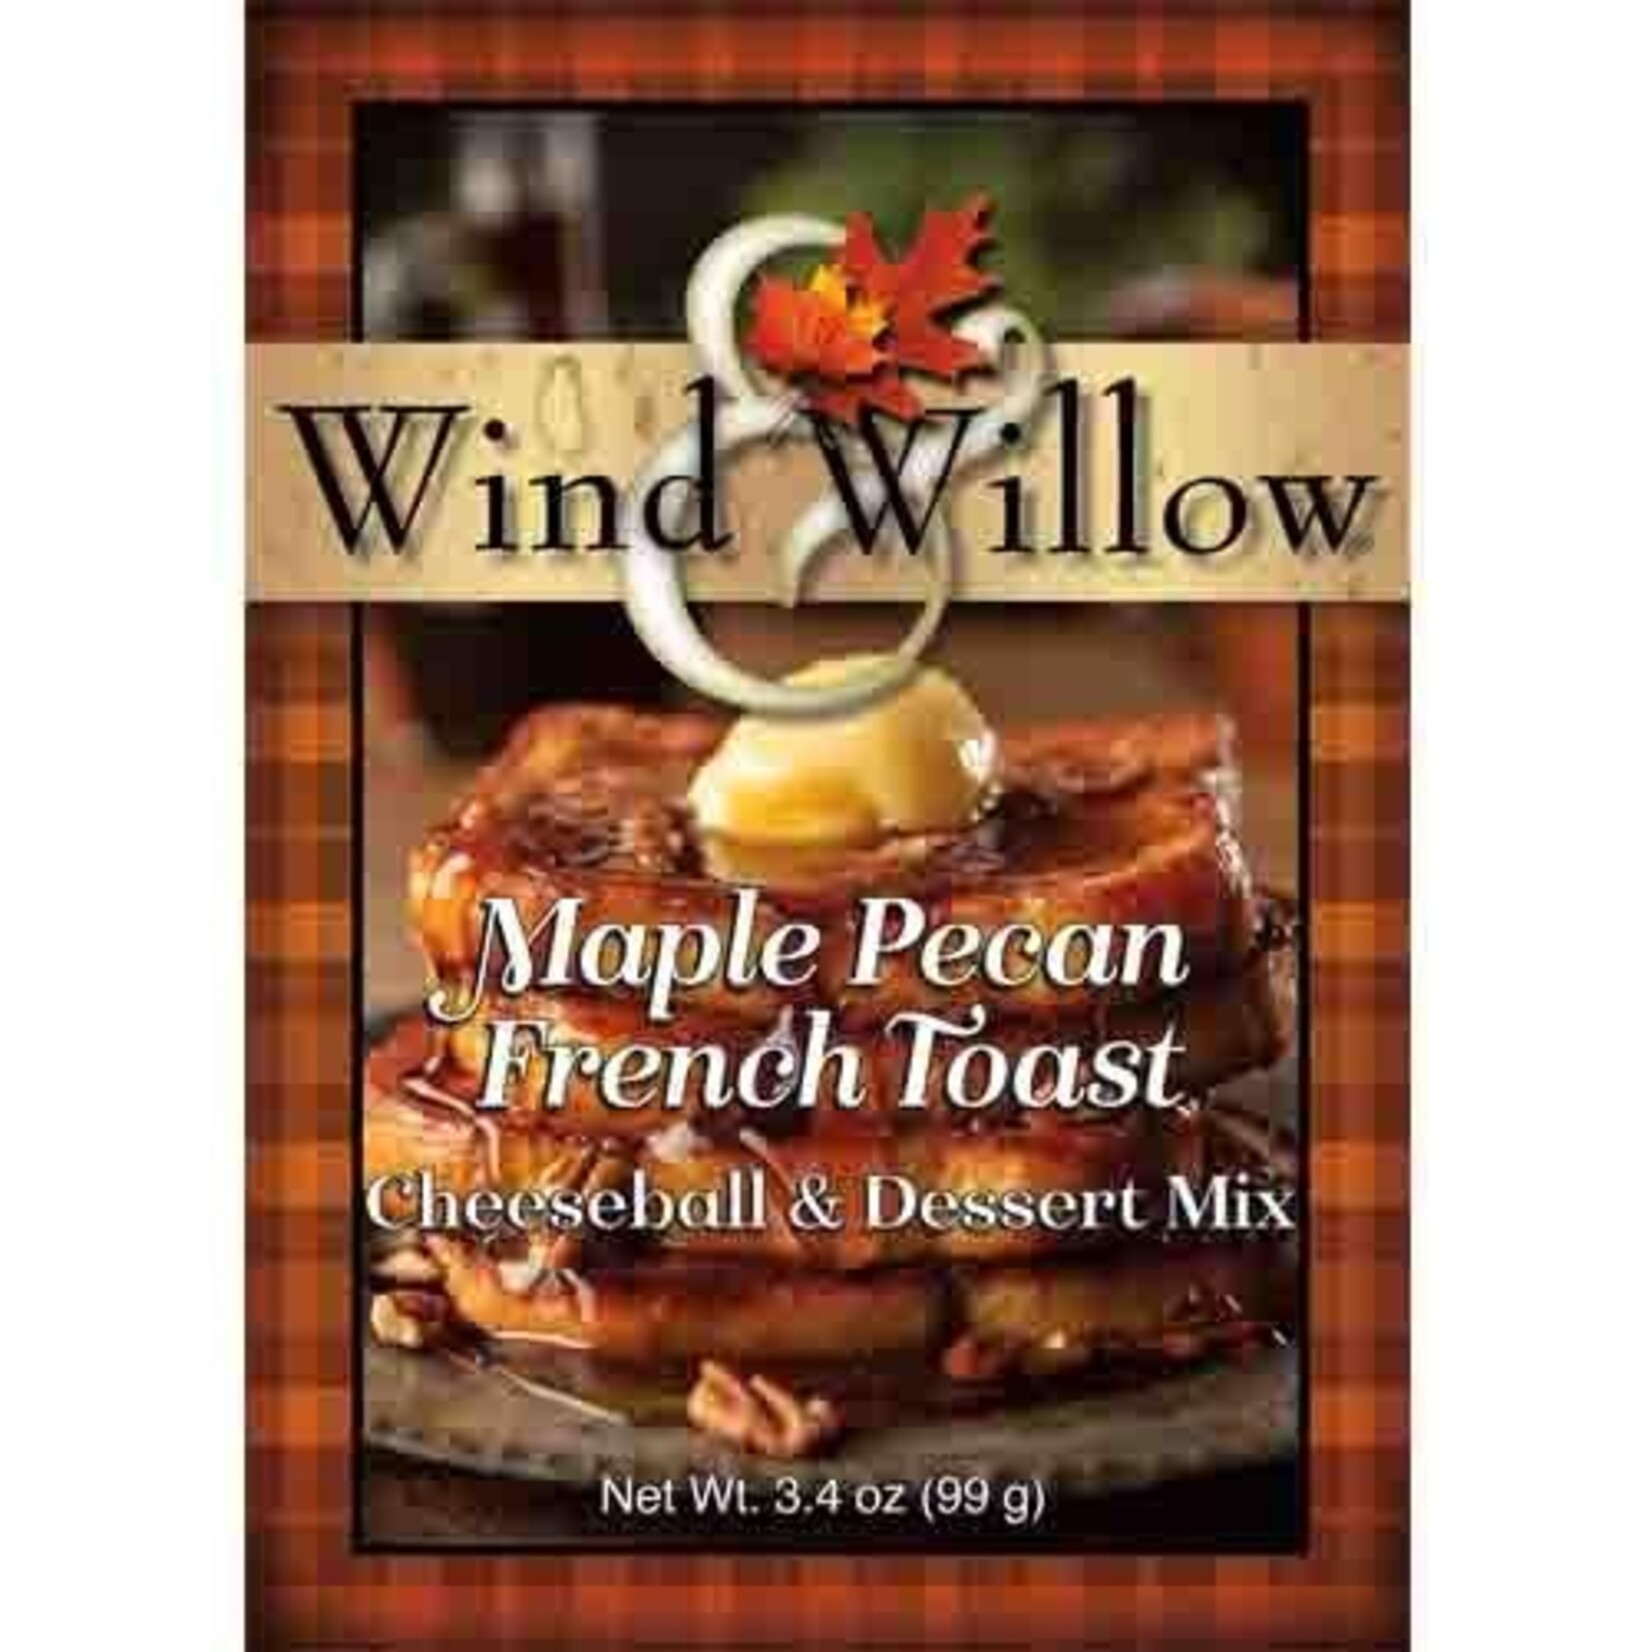 Wind & Willow Maple Pecan French Toast Cheeseball & Dessert Mix